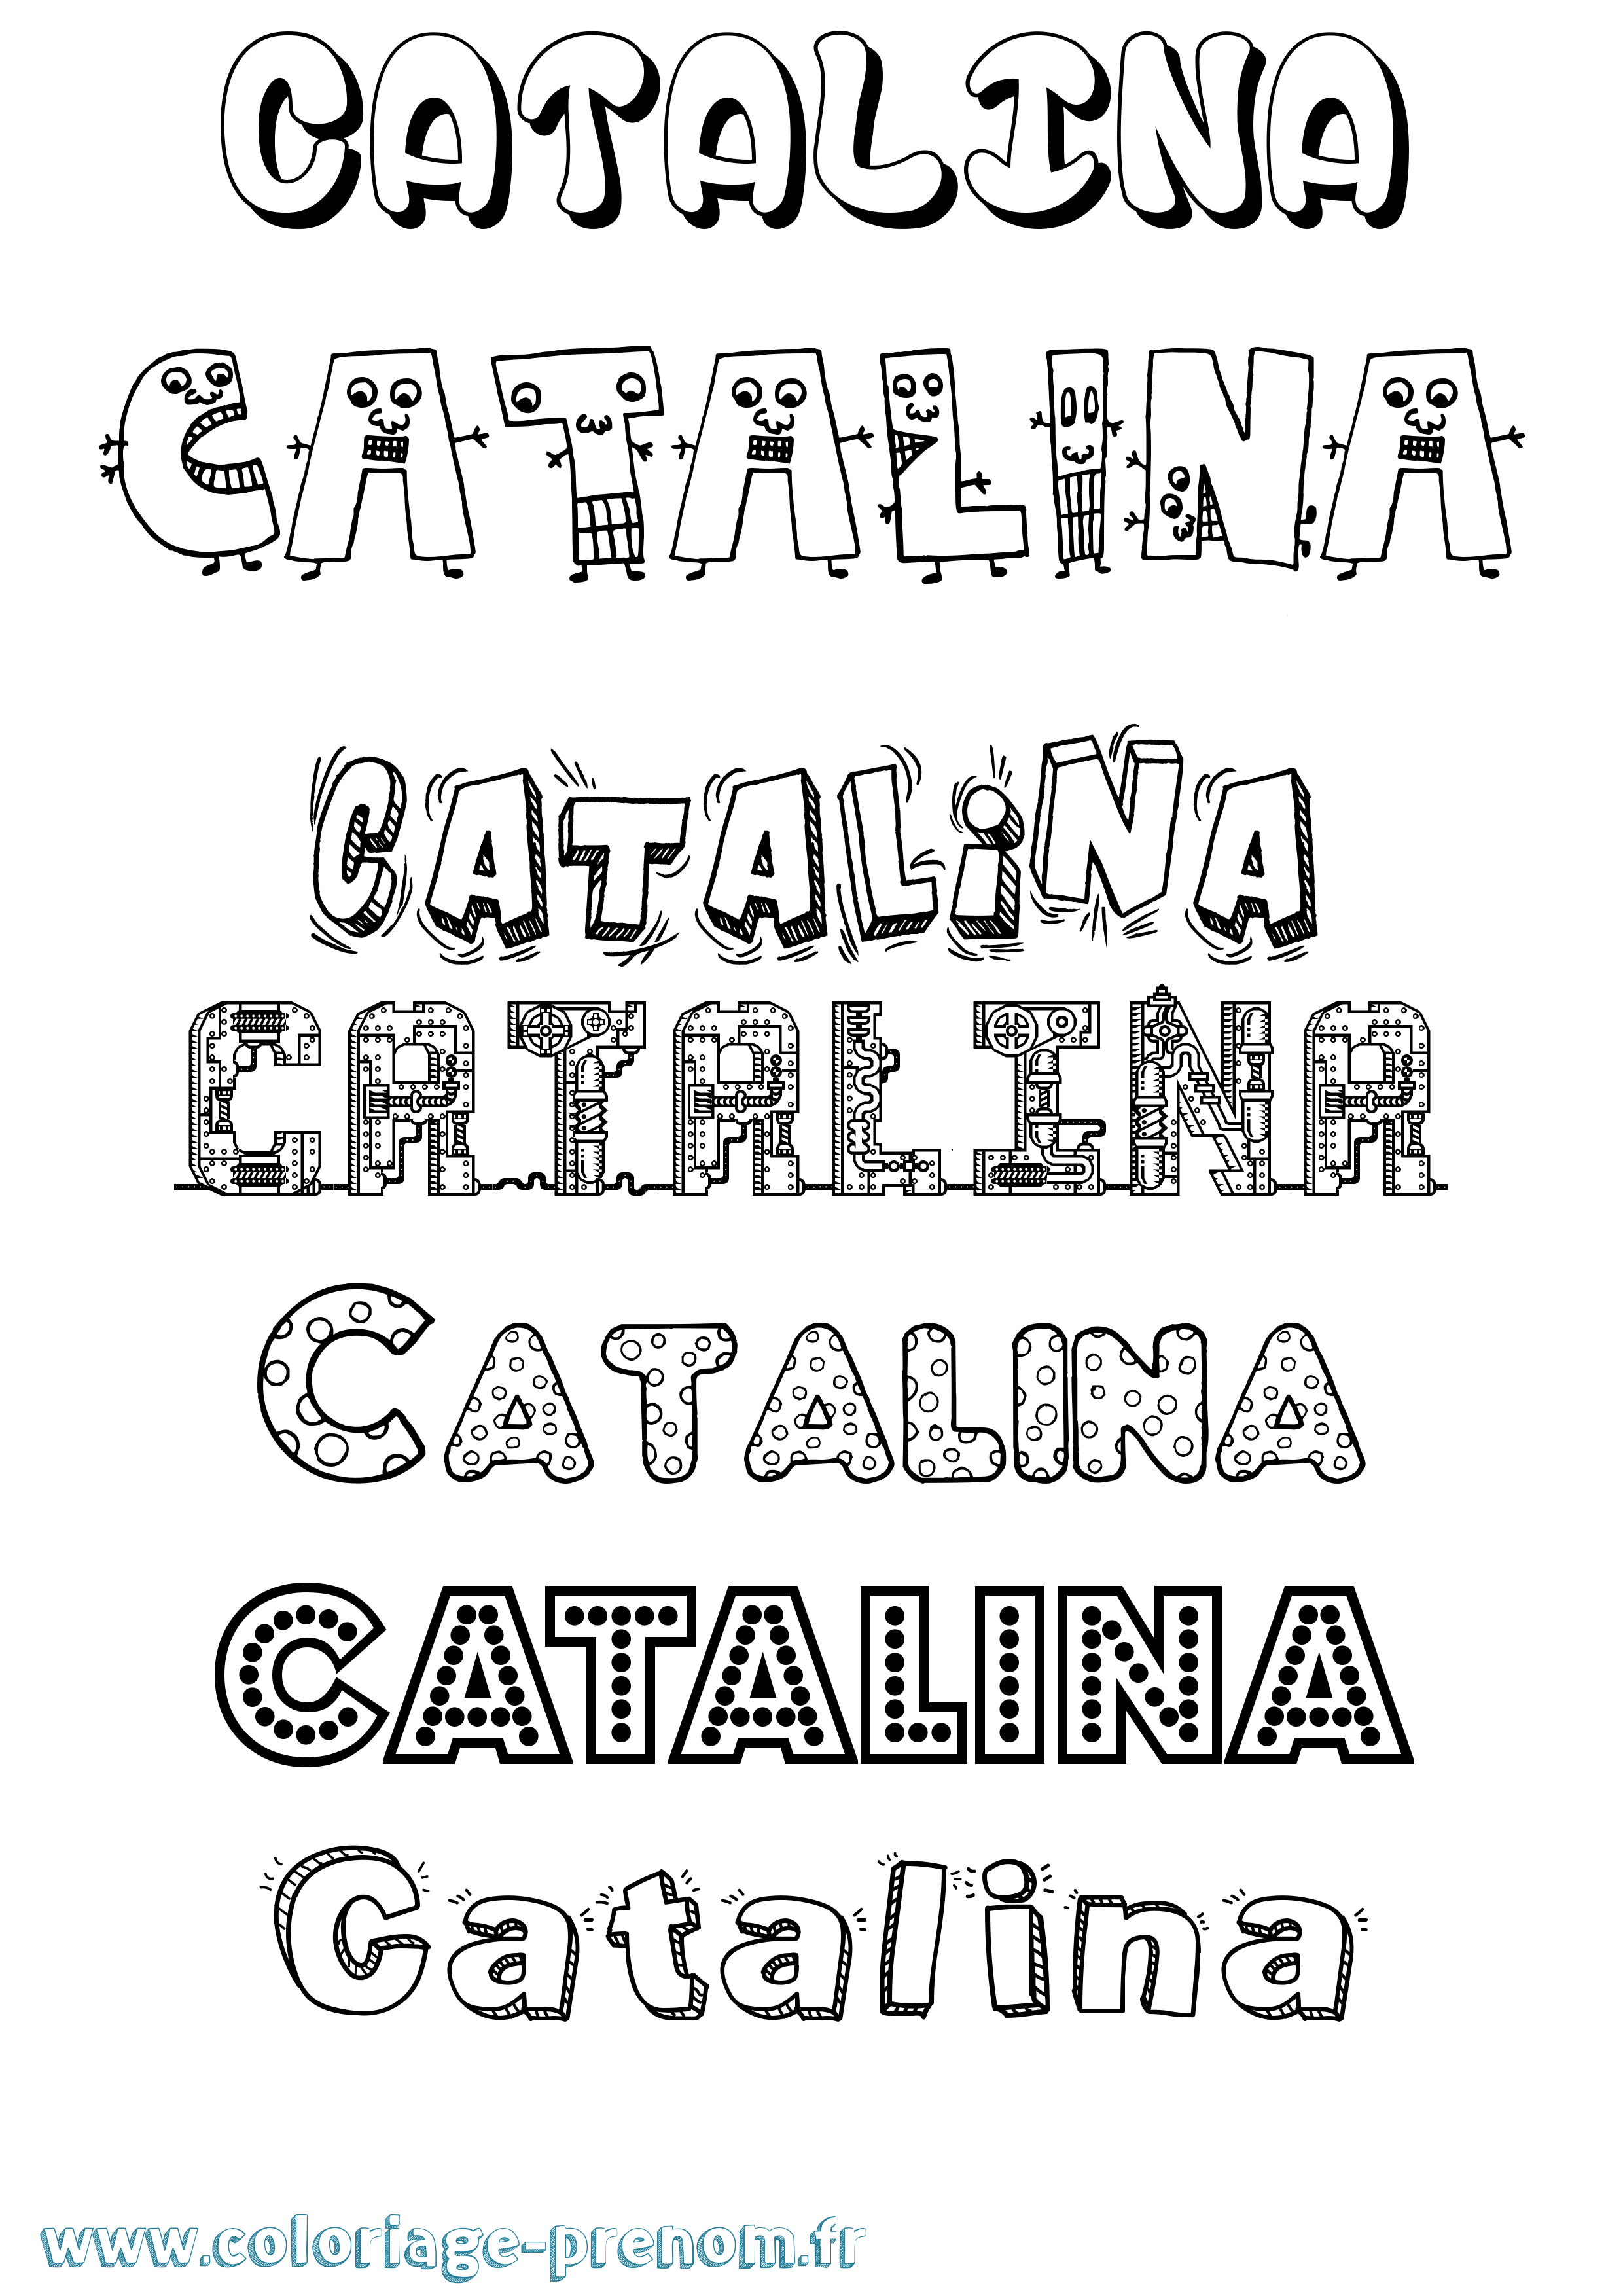 Coloriage prénom Catalina Fun